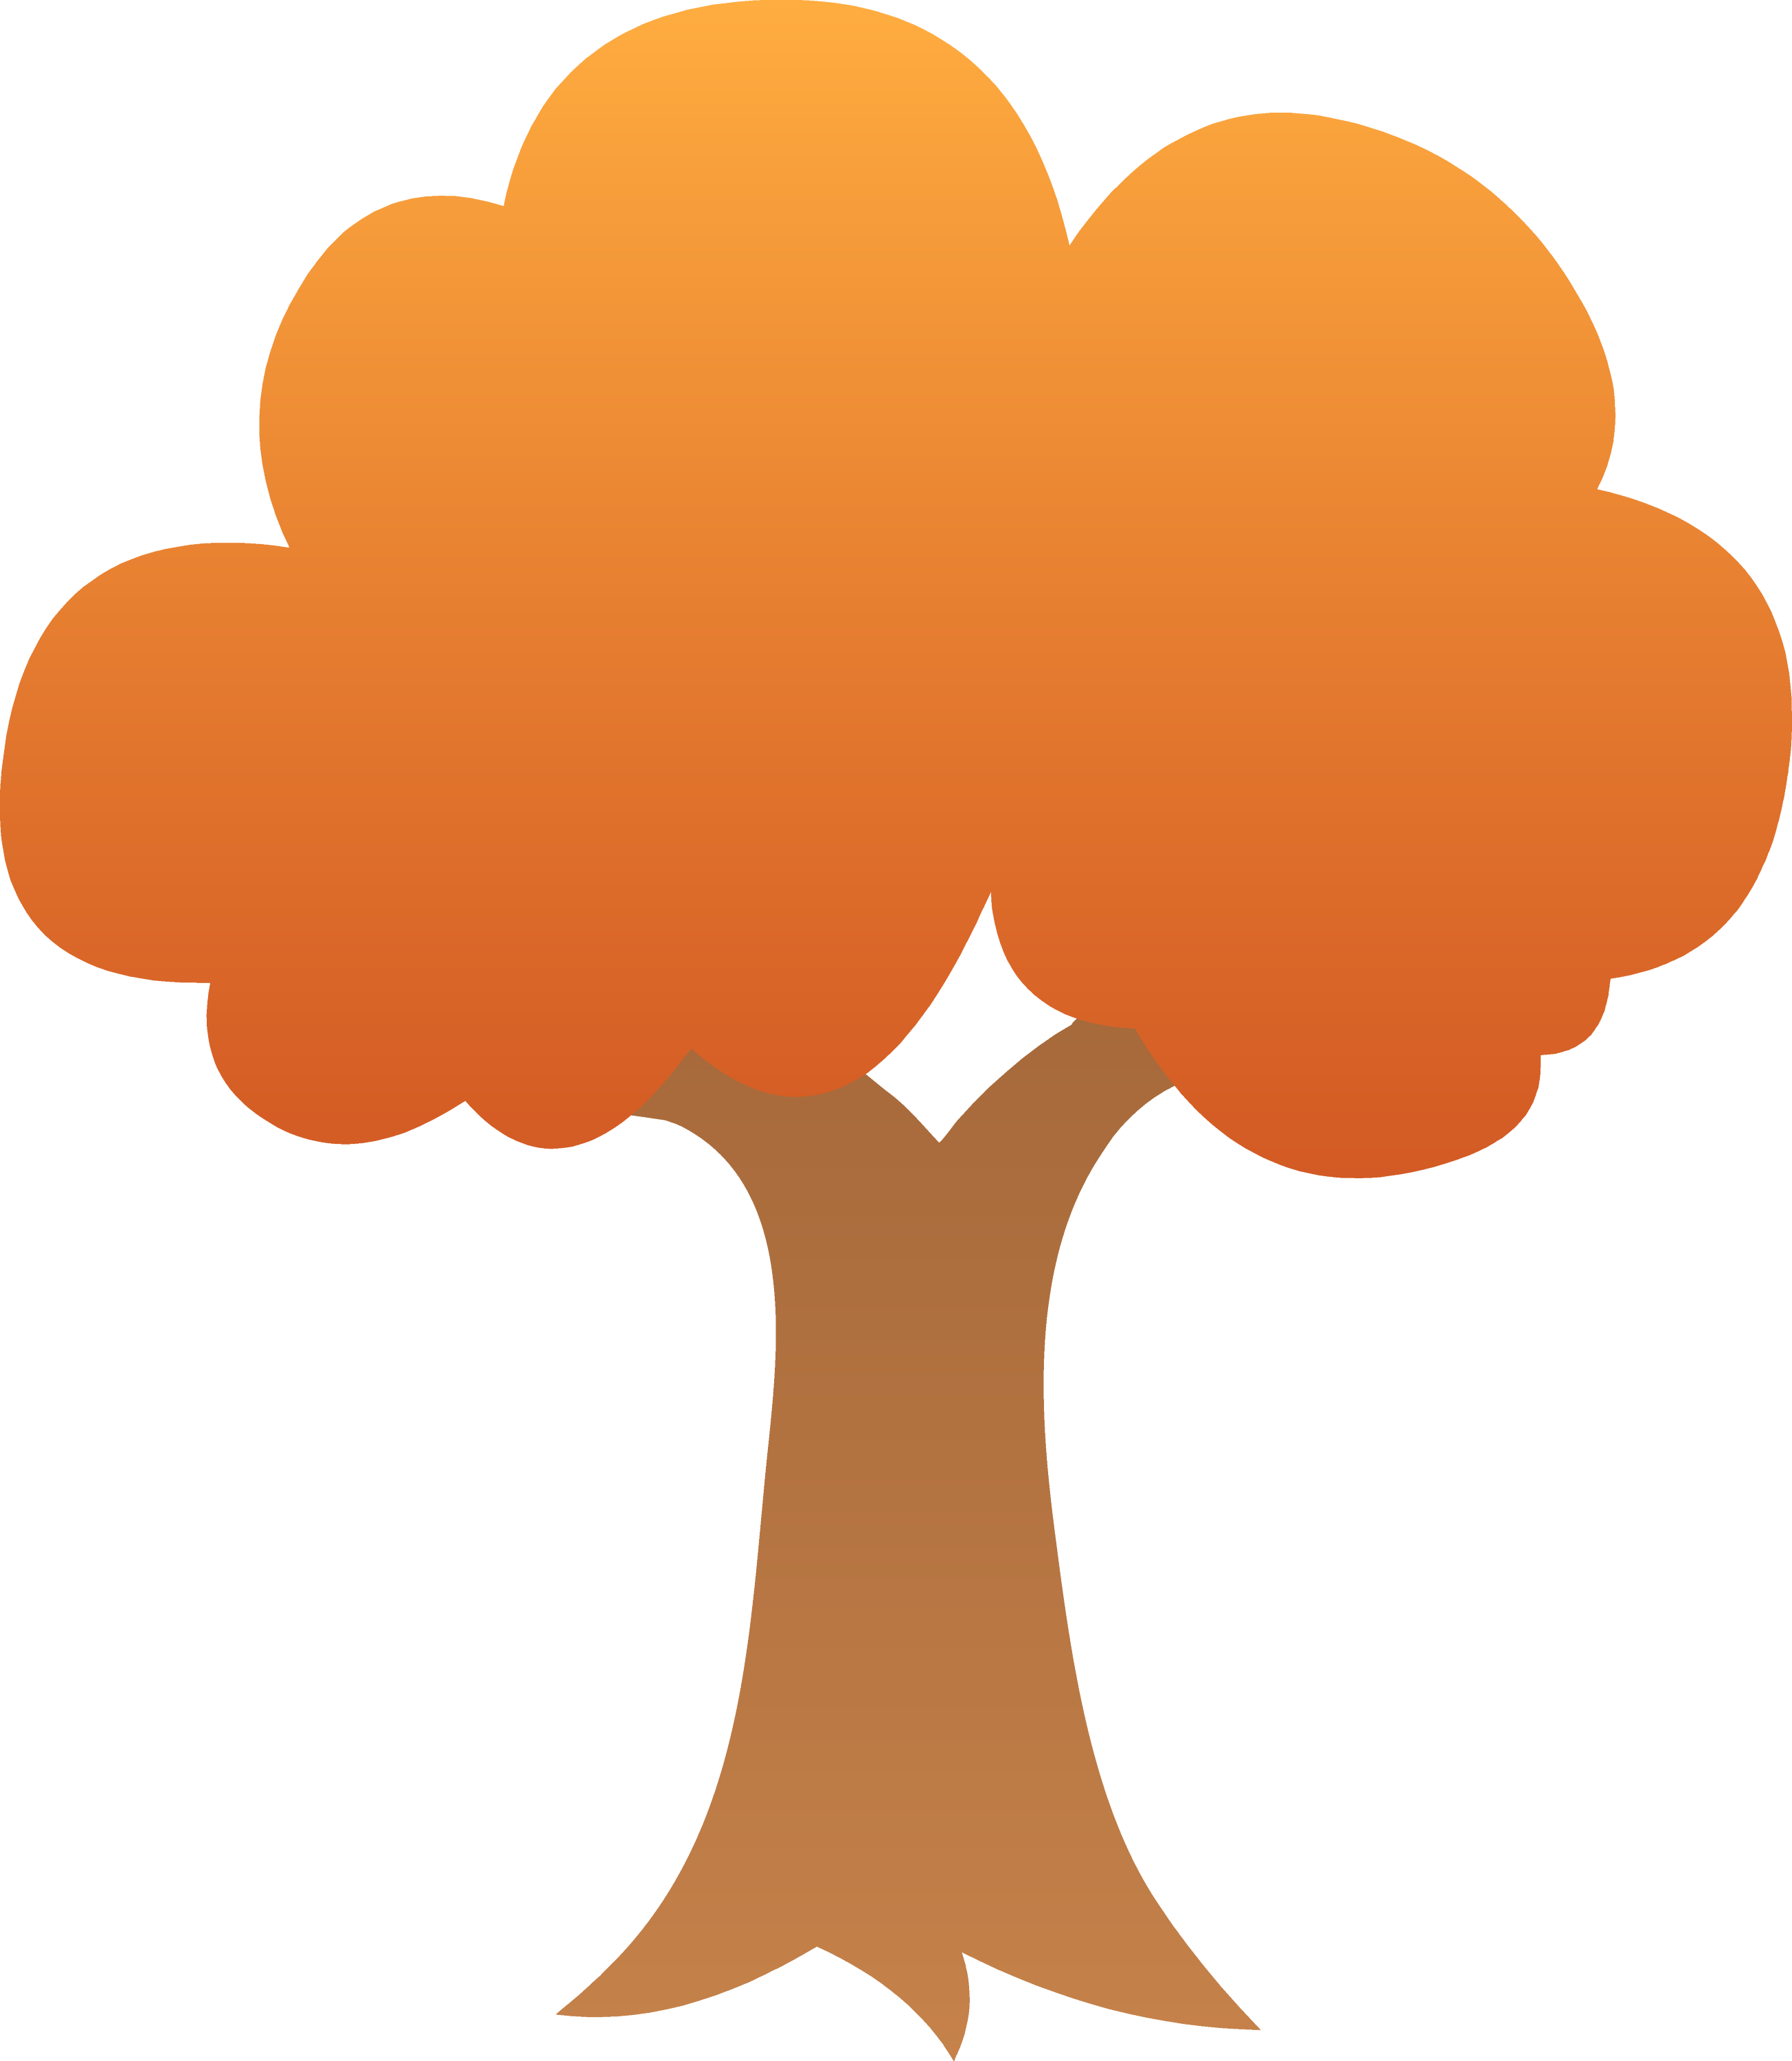 Cute Autumn Tree Design - Free Clip Art